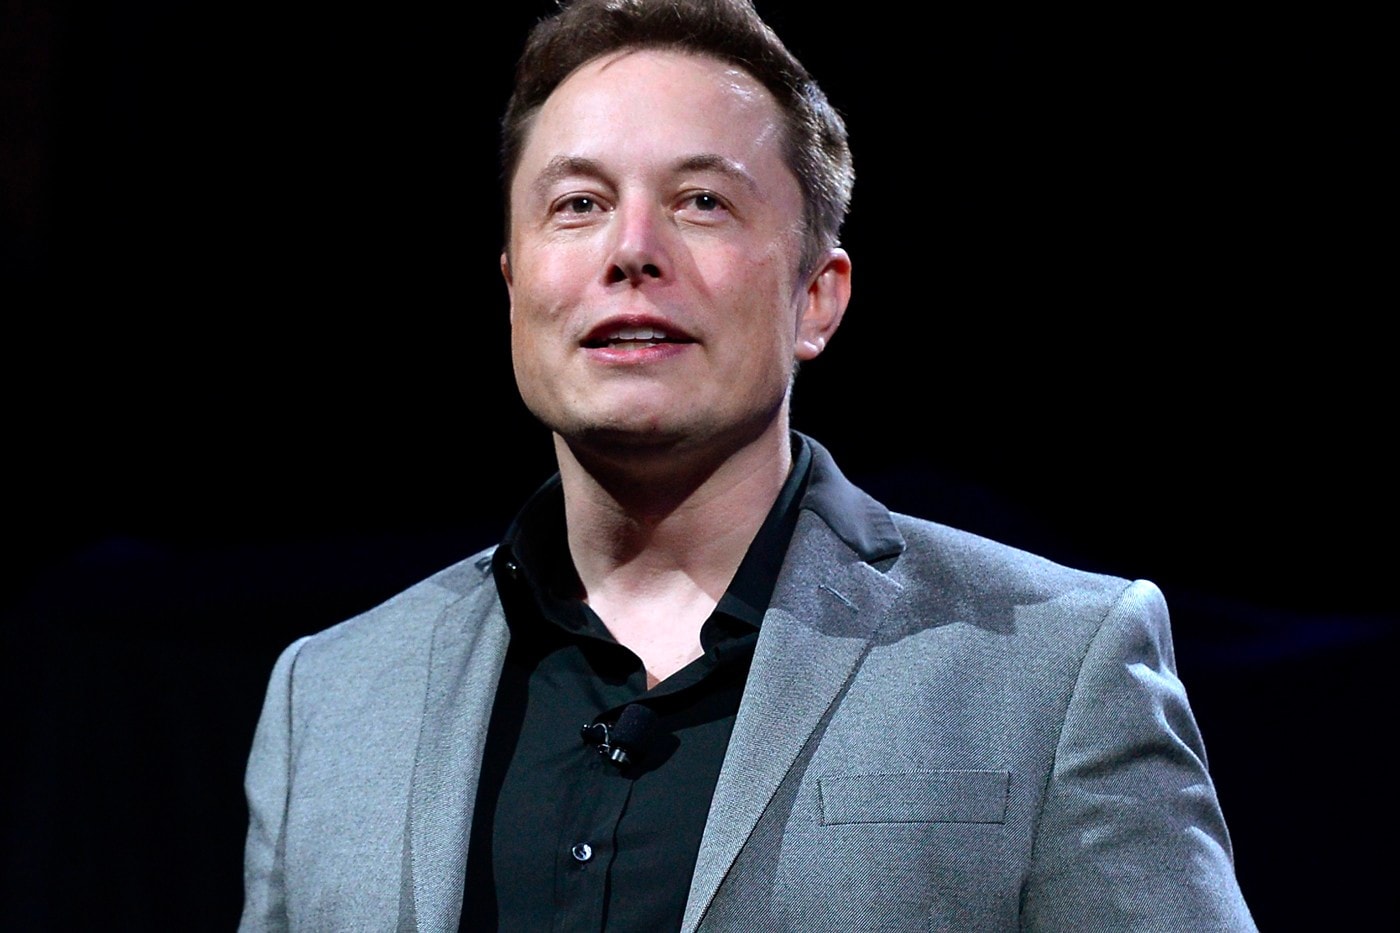 Power lunch: World's two richest people Elon Musk and Bernard